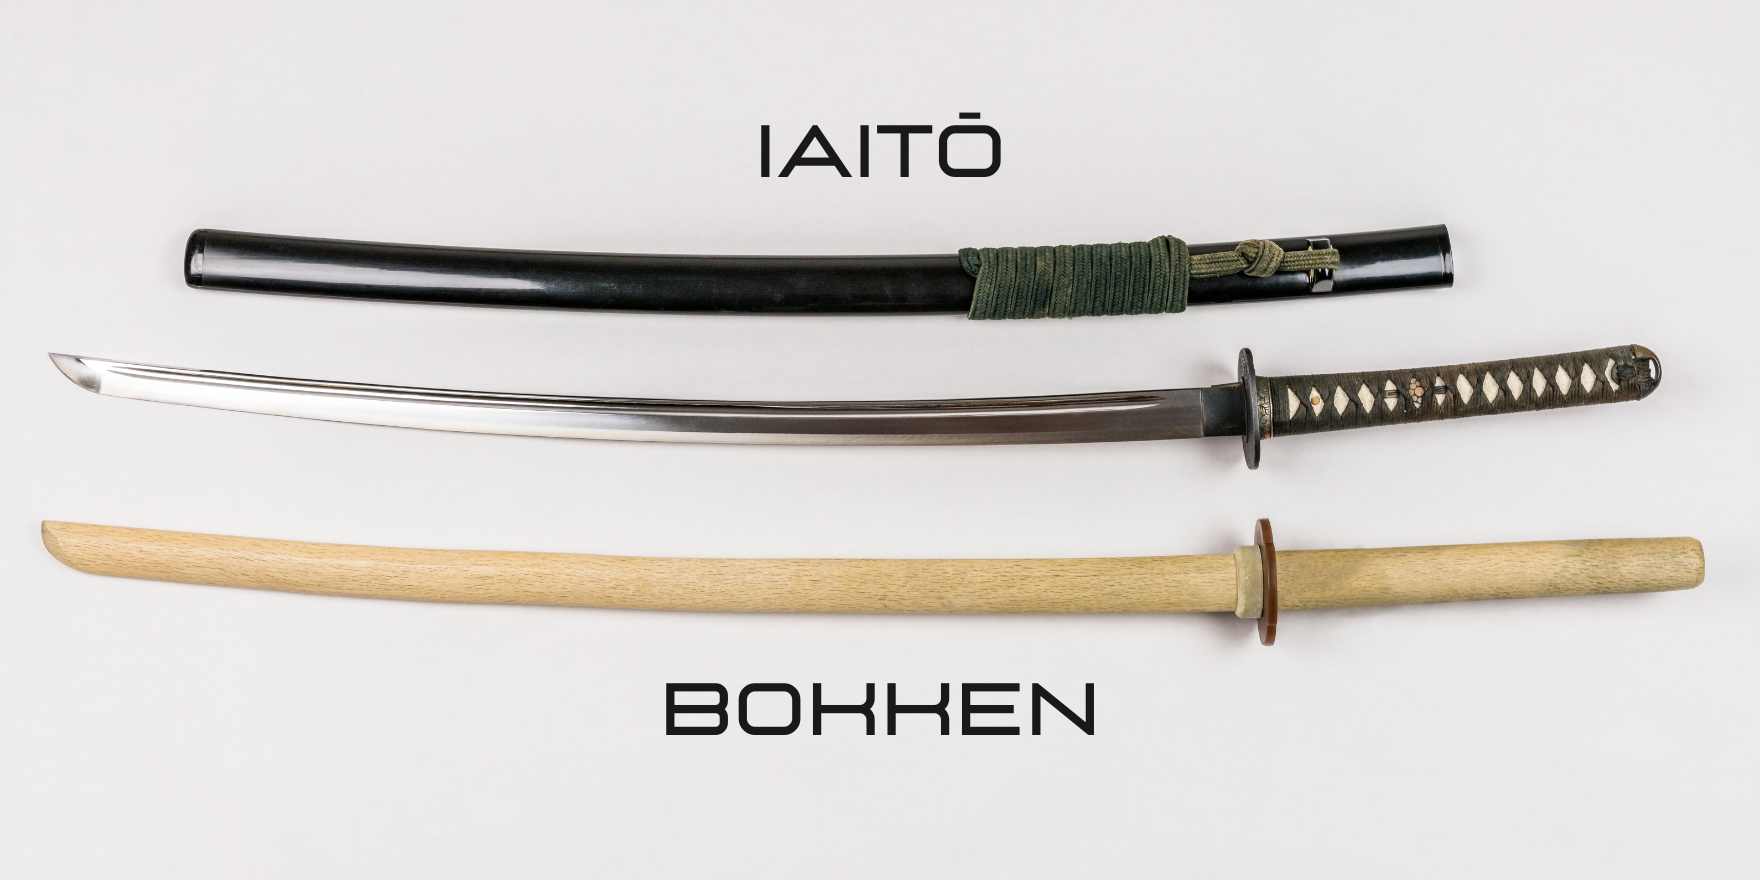 iaito vs bokken